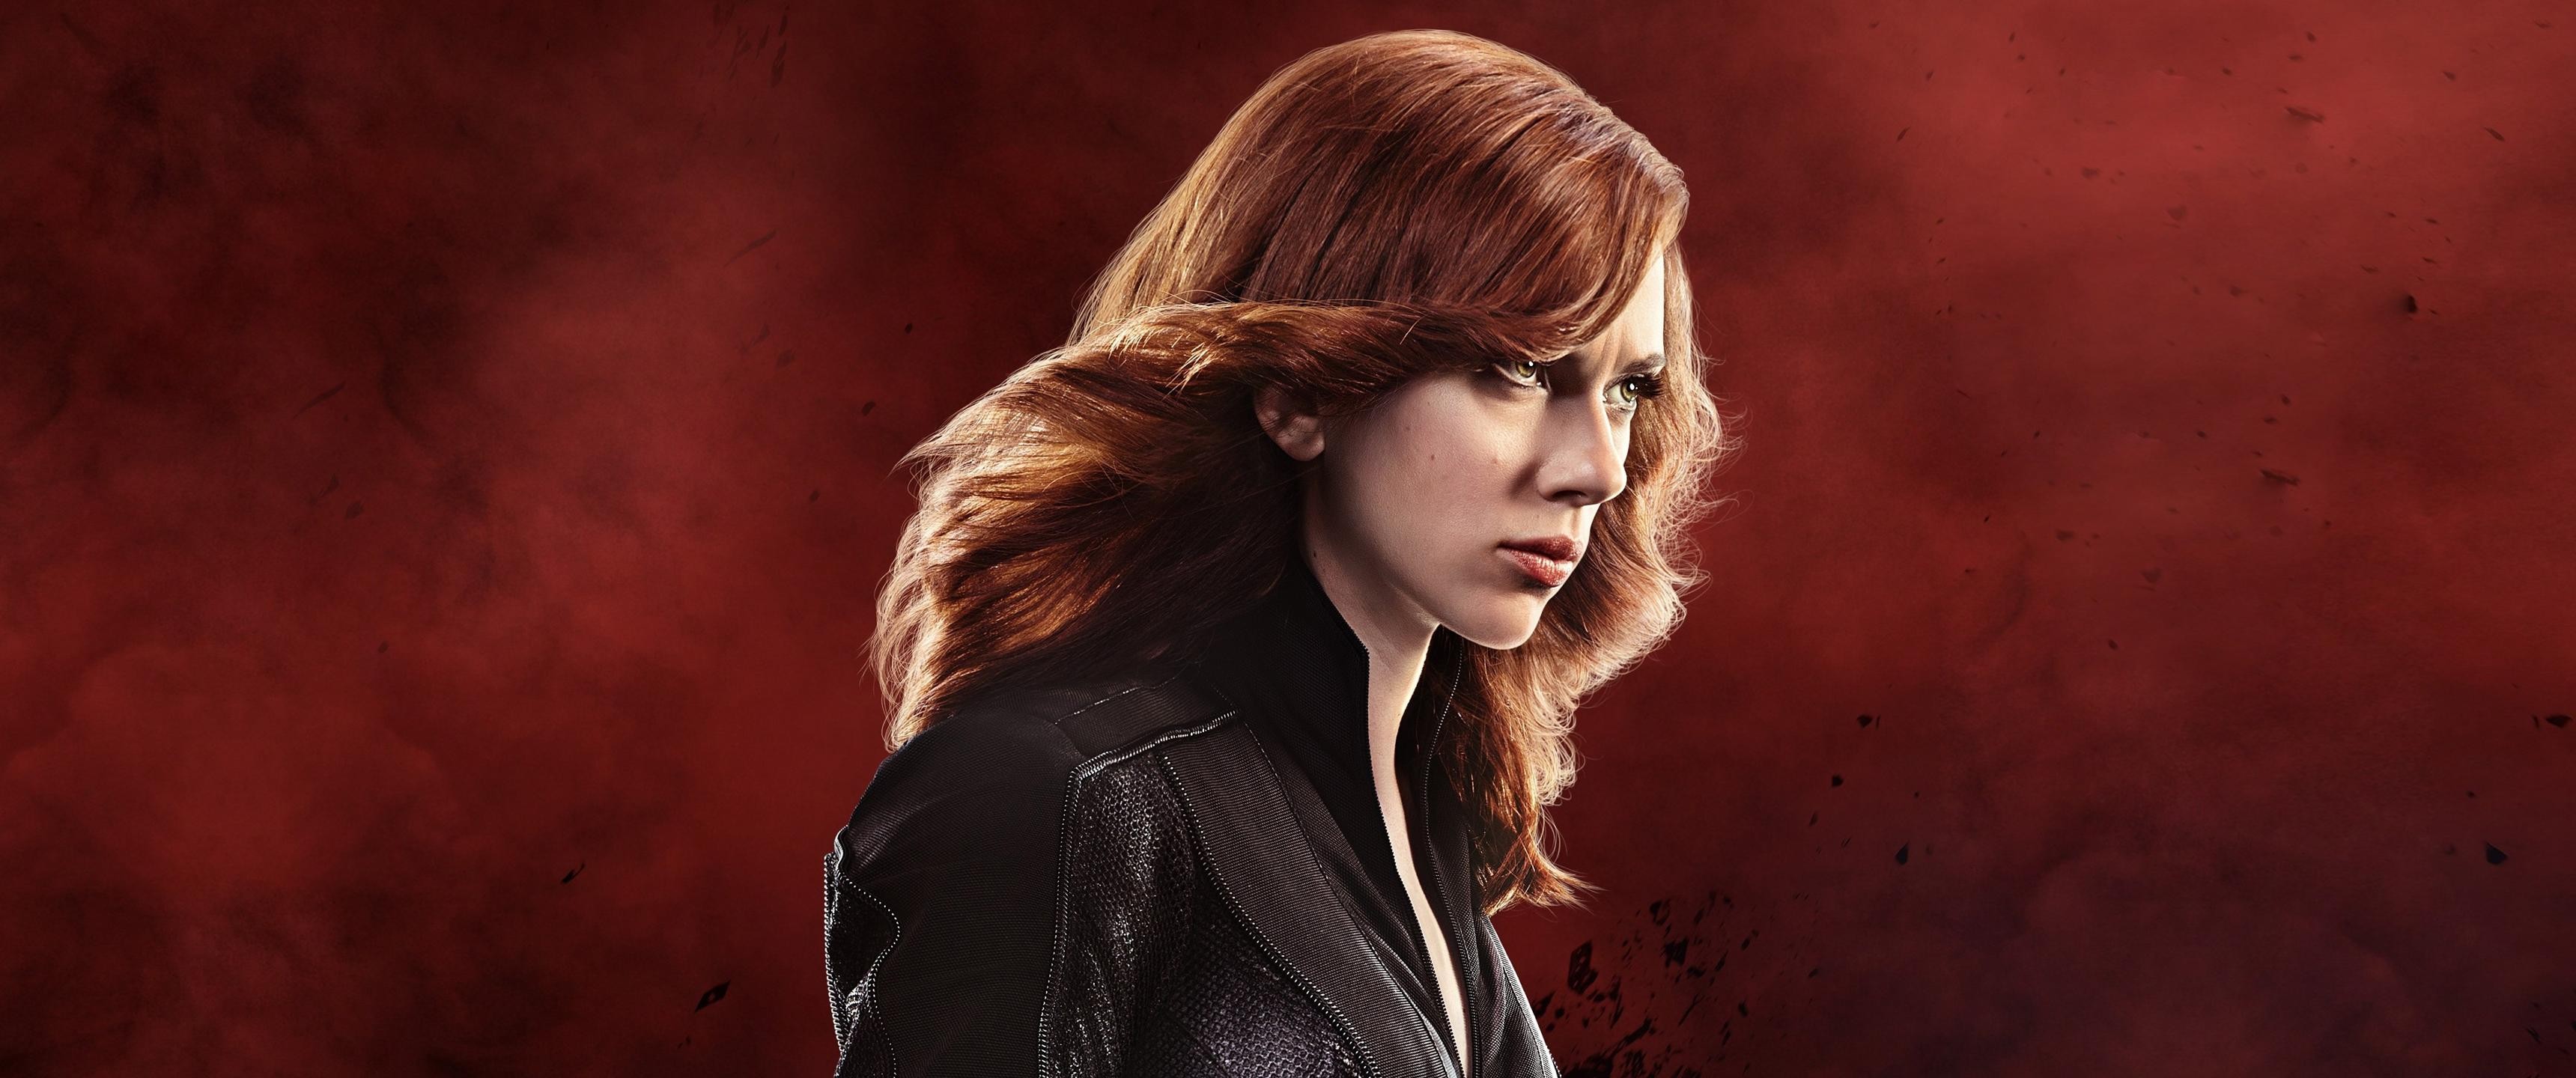 Scarlett Johansson Actress Red Background Redhead The Avengers Women Black Widow 3440x1440